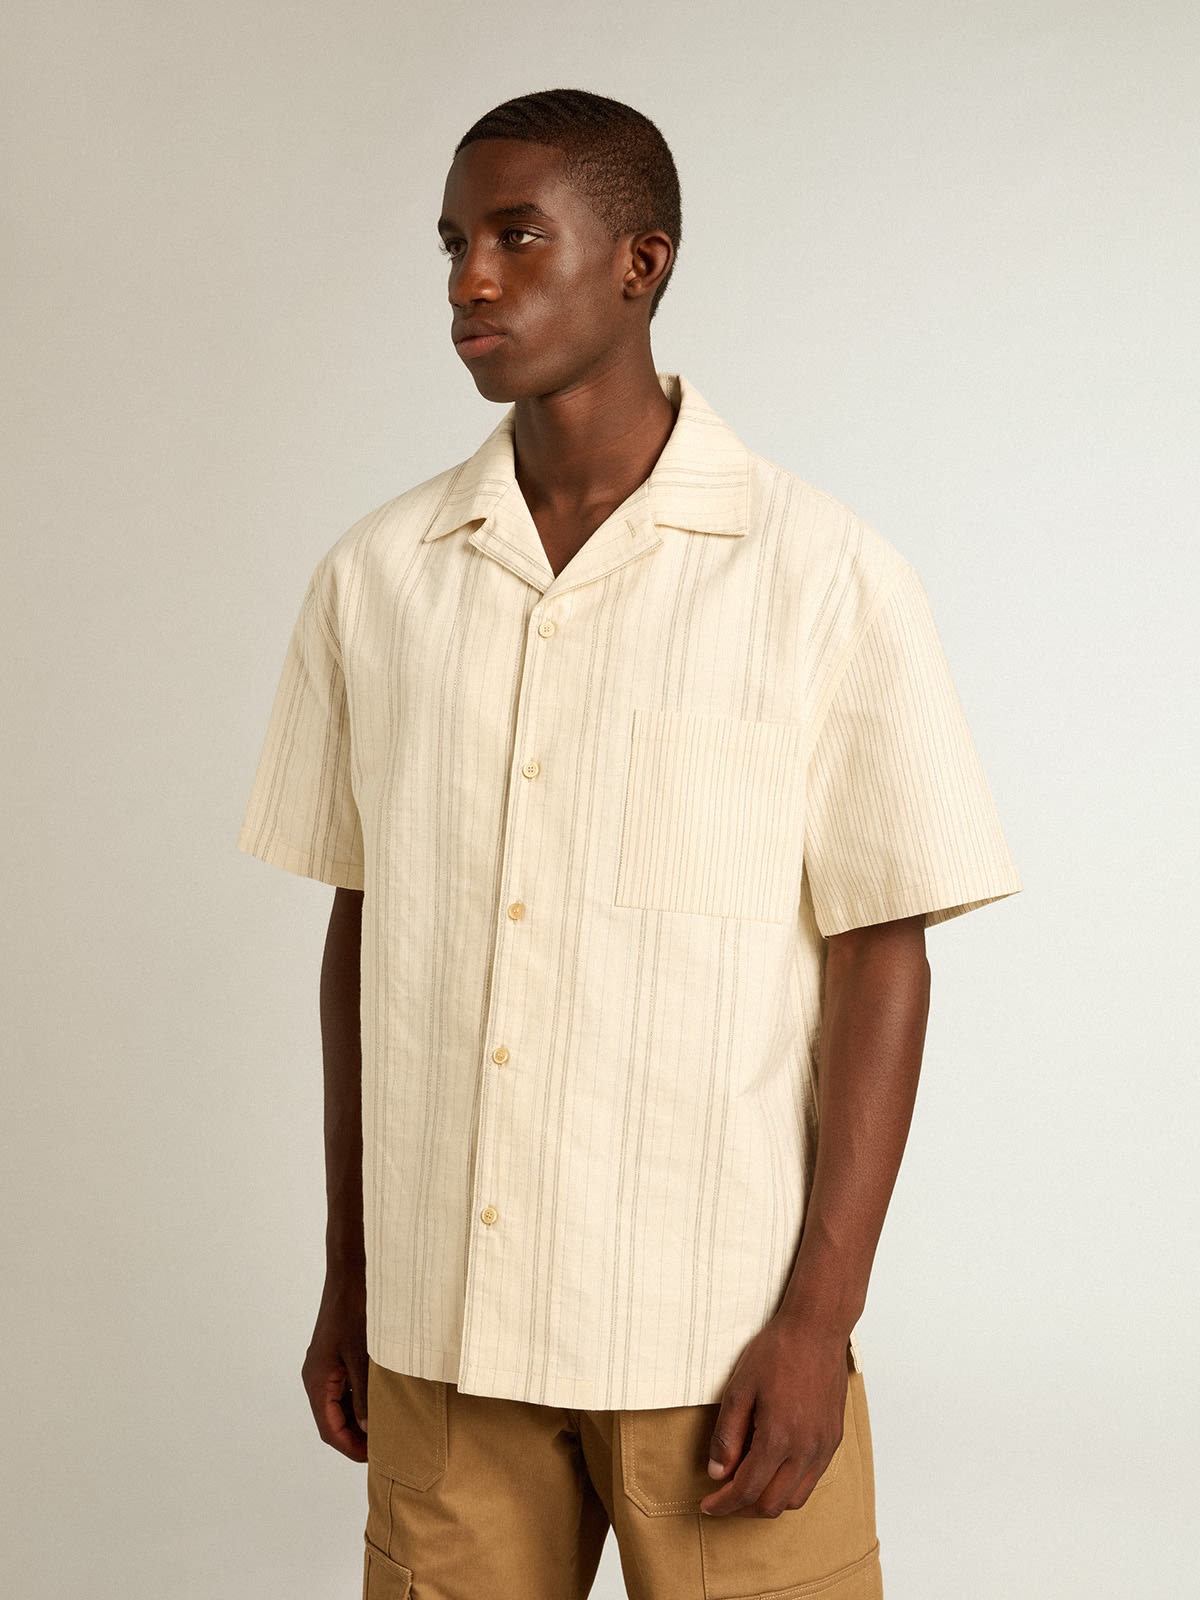 Men's short-sleeved shirt in ecru-colored cotton - 5